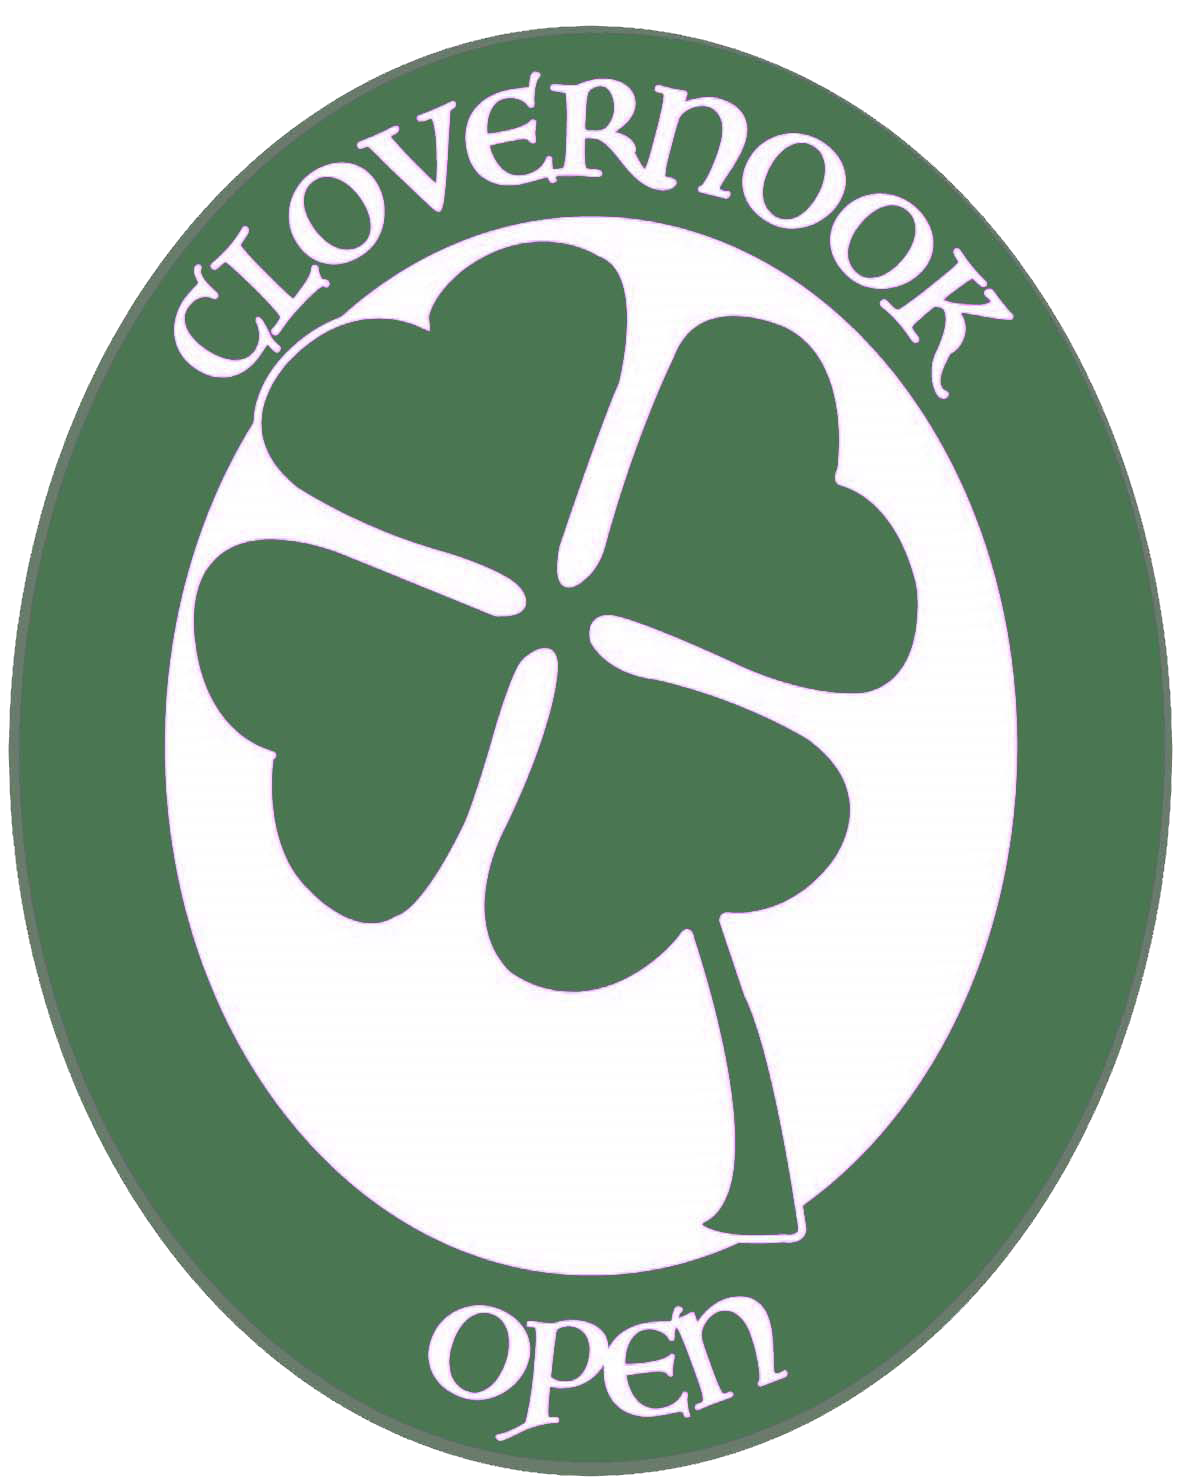 The Clovernook Open